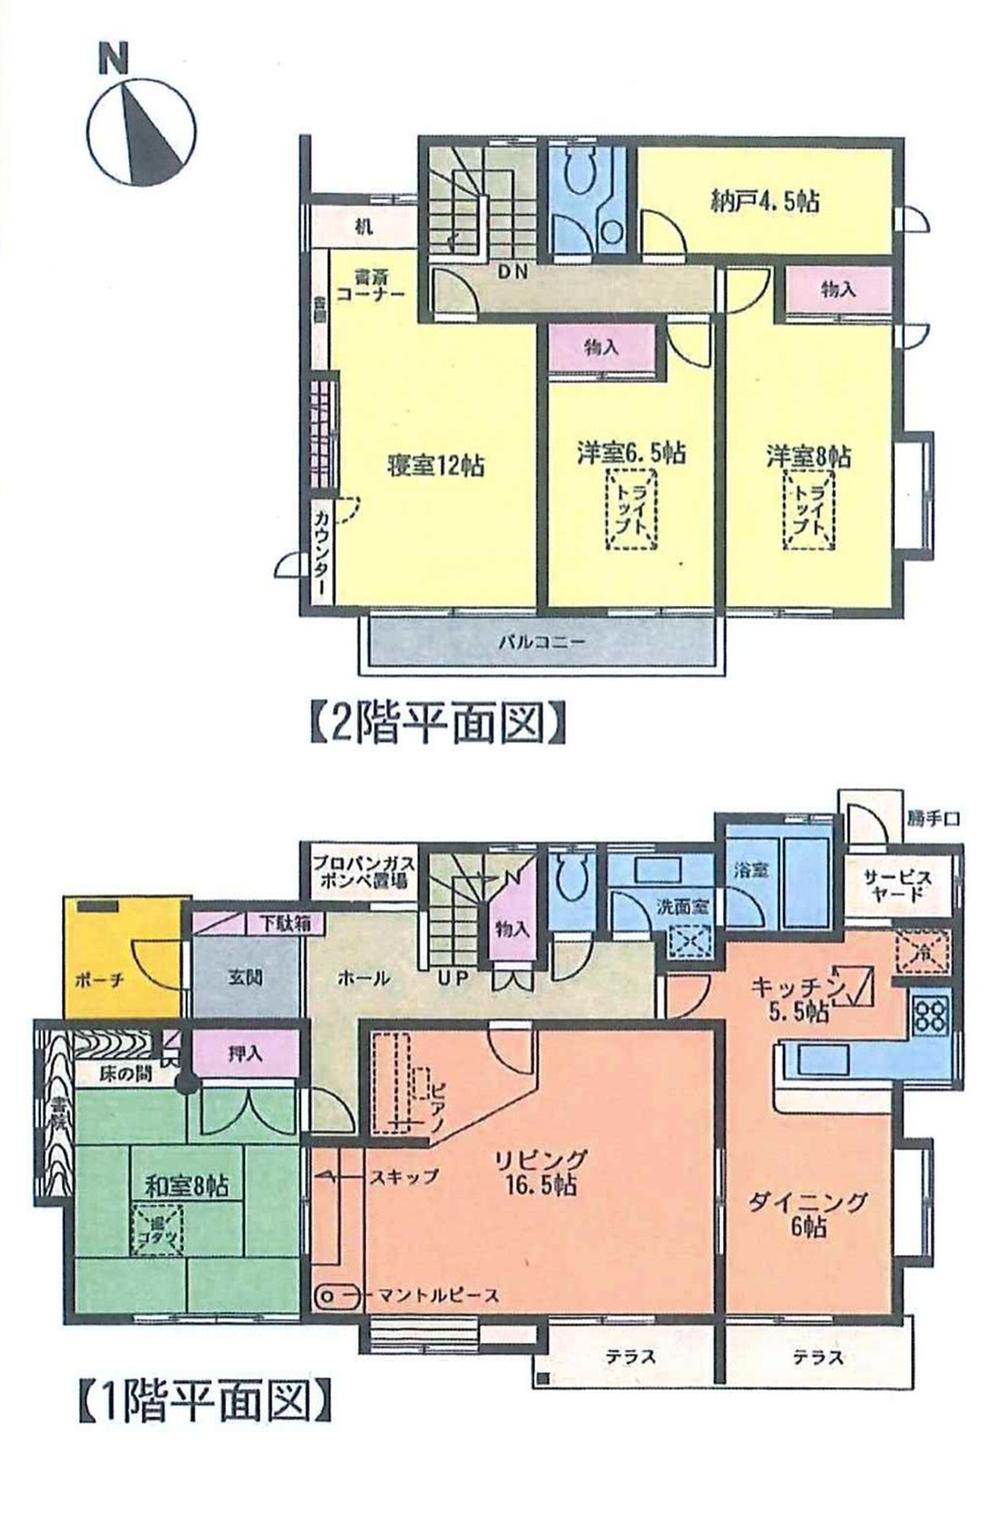 Floor plan. 36.5 million yen, 4LDK + S (storeroom), Land area 365.54 sq m , Building area 159.68 sq m